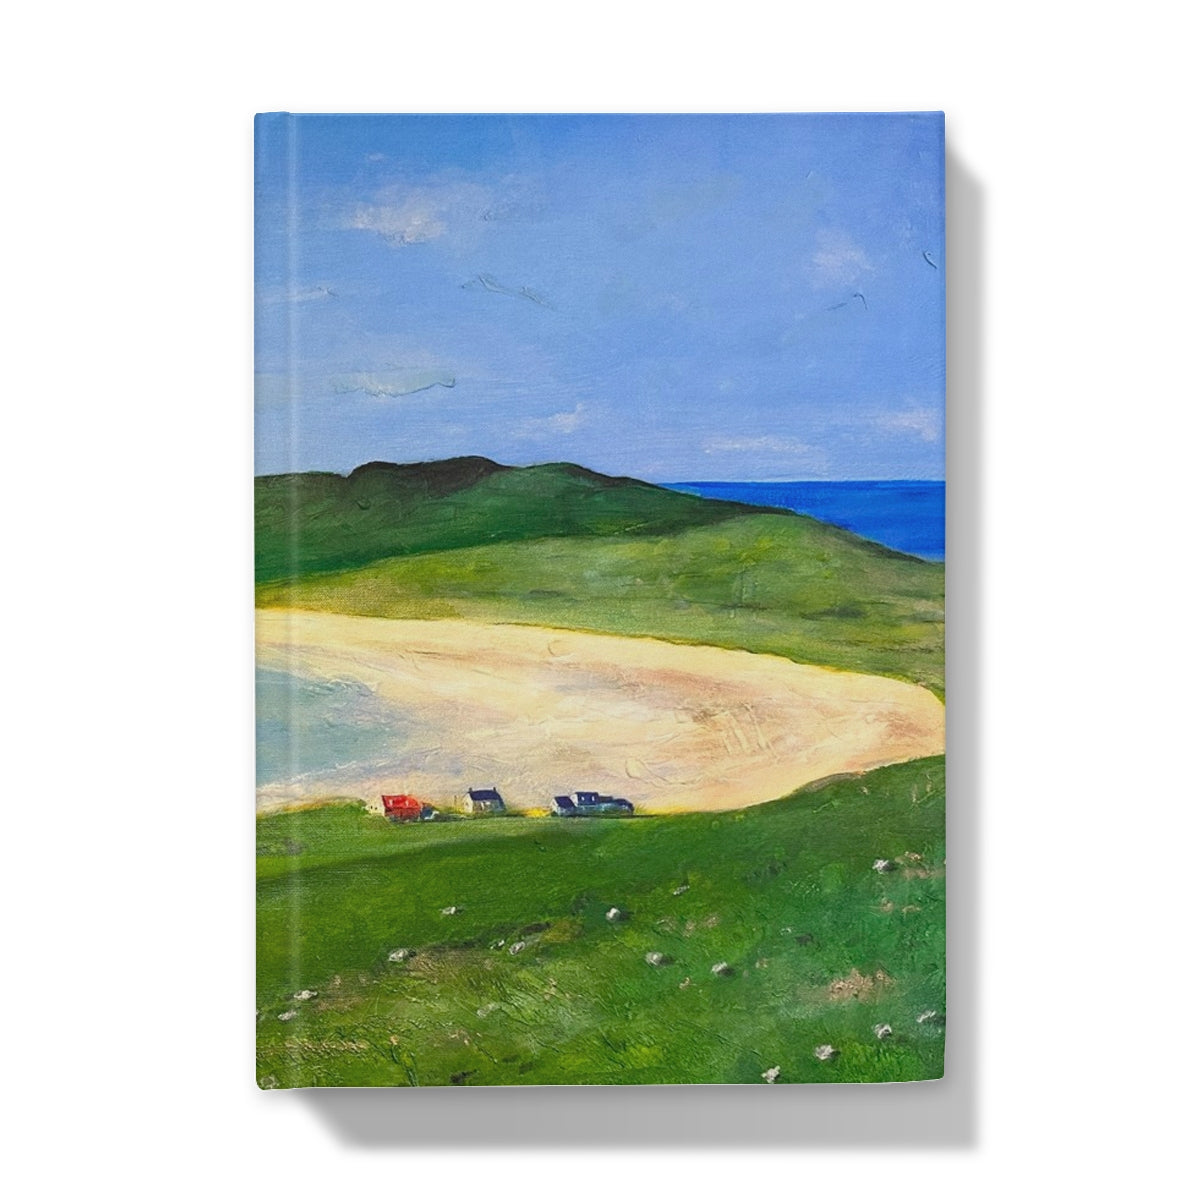 Balephuil Beach Tiree Art Gifts Hardback Journal-Journals & Notebooks-Hebridean Islands Art Gallery-A4-Lined-Paintings, Prints, Homeware, Art Gifts From Scotland By Scottish Artist Kevin Hunter